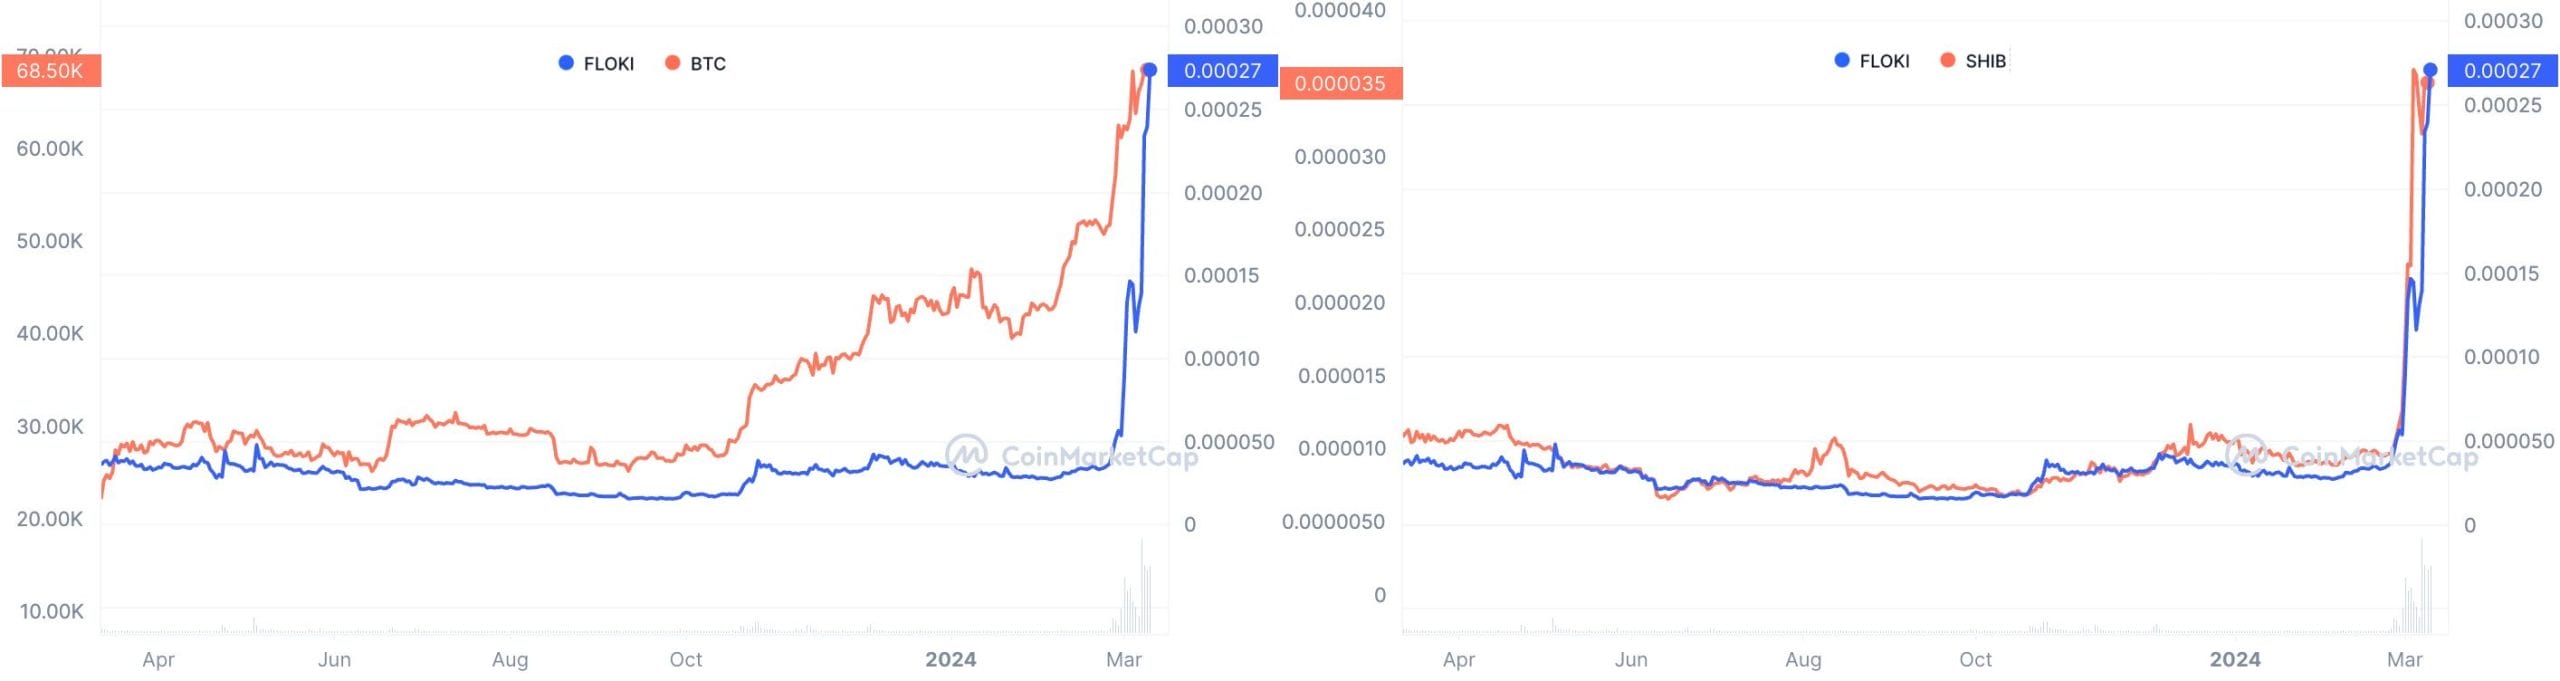 Floki vs Bitcoin and Floki vs Shiba Inu Charts